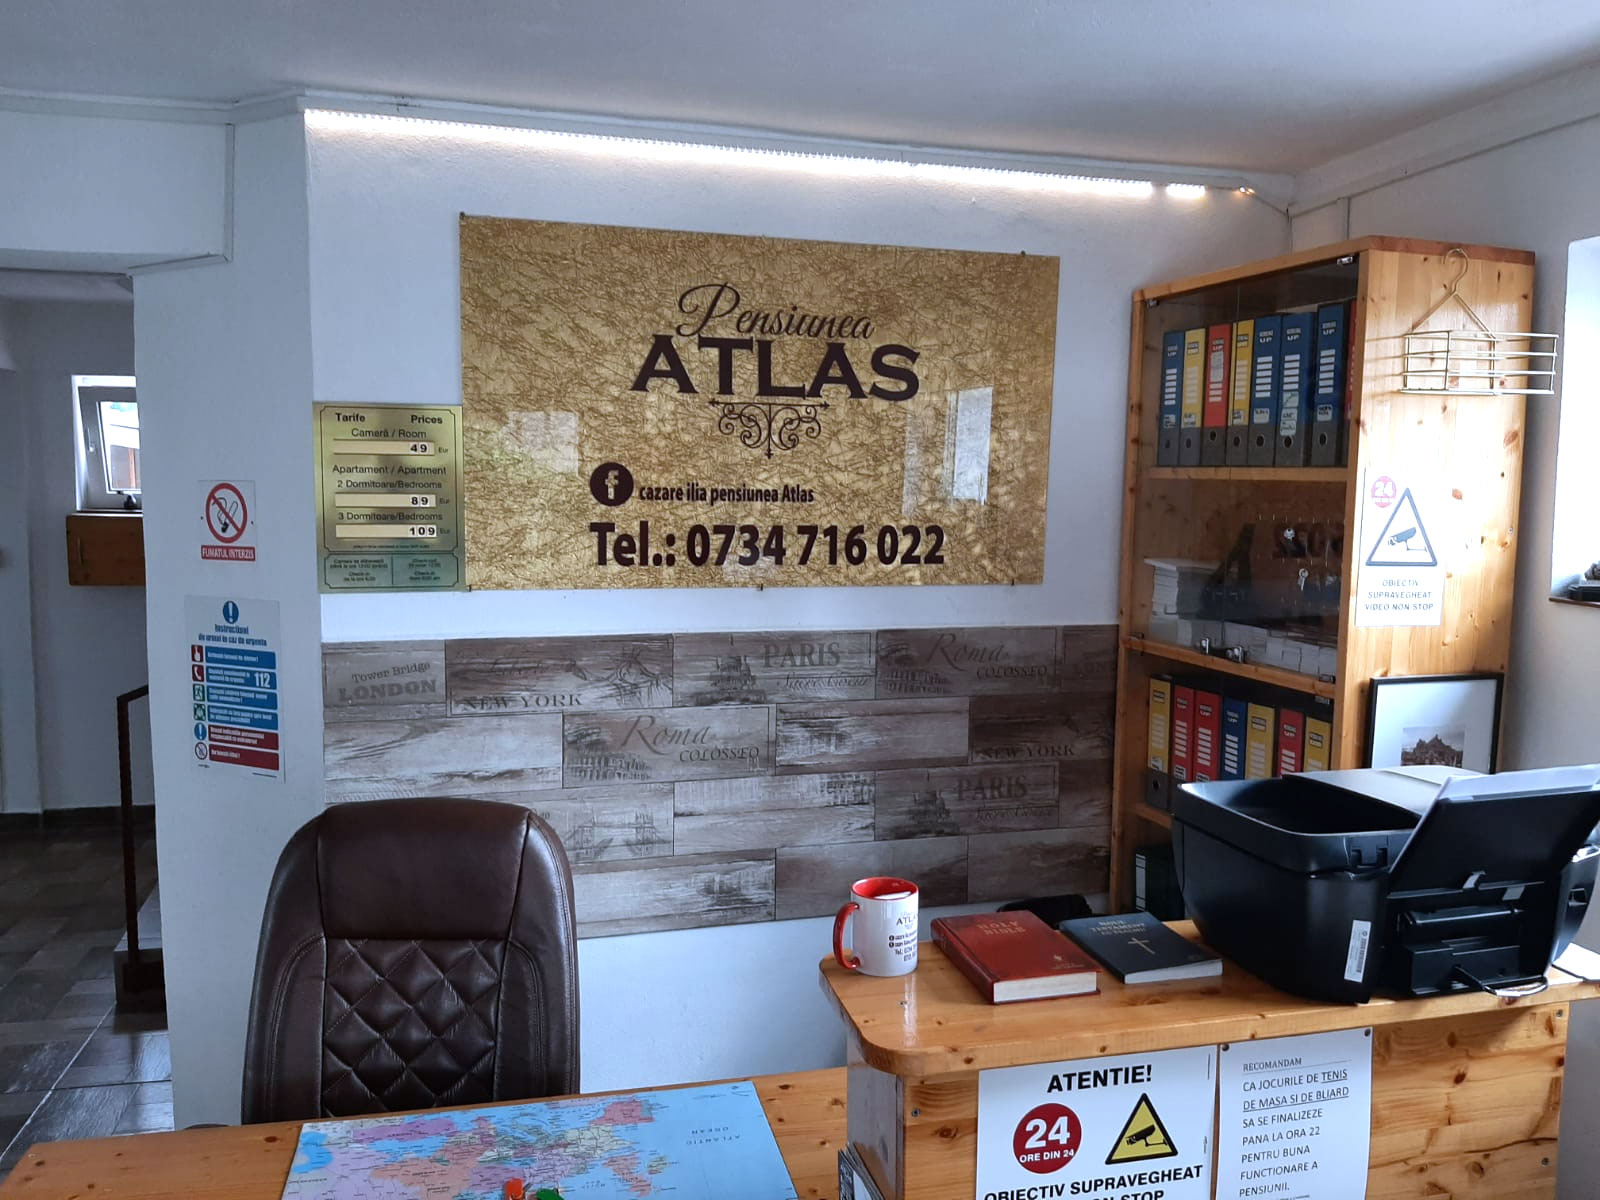 Pensiunea Atlas Ilia - receptia